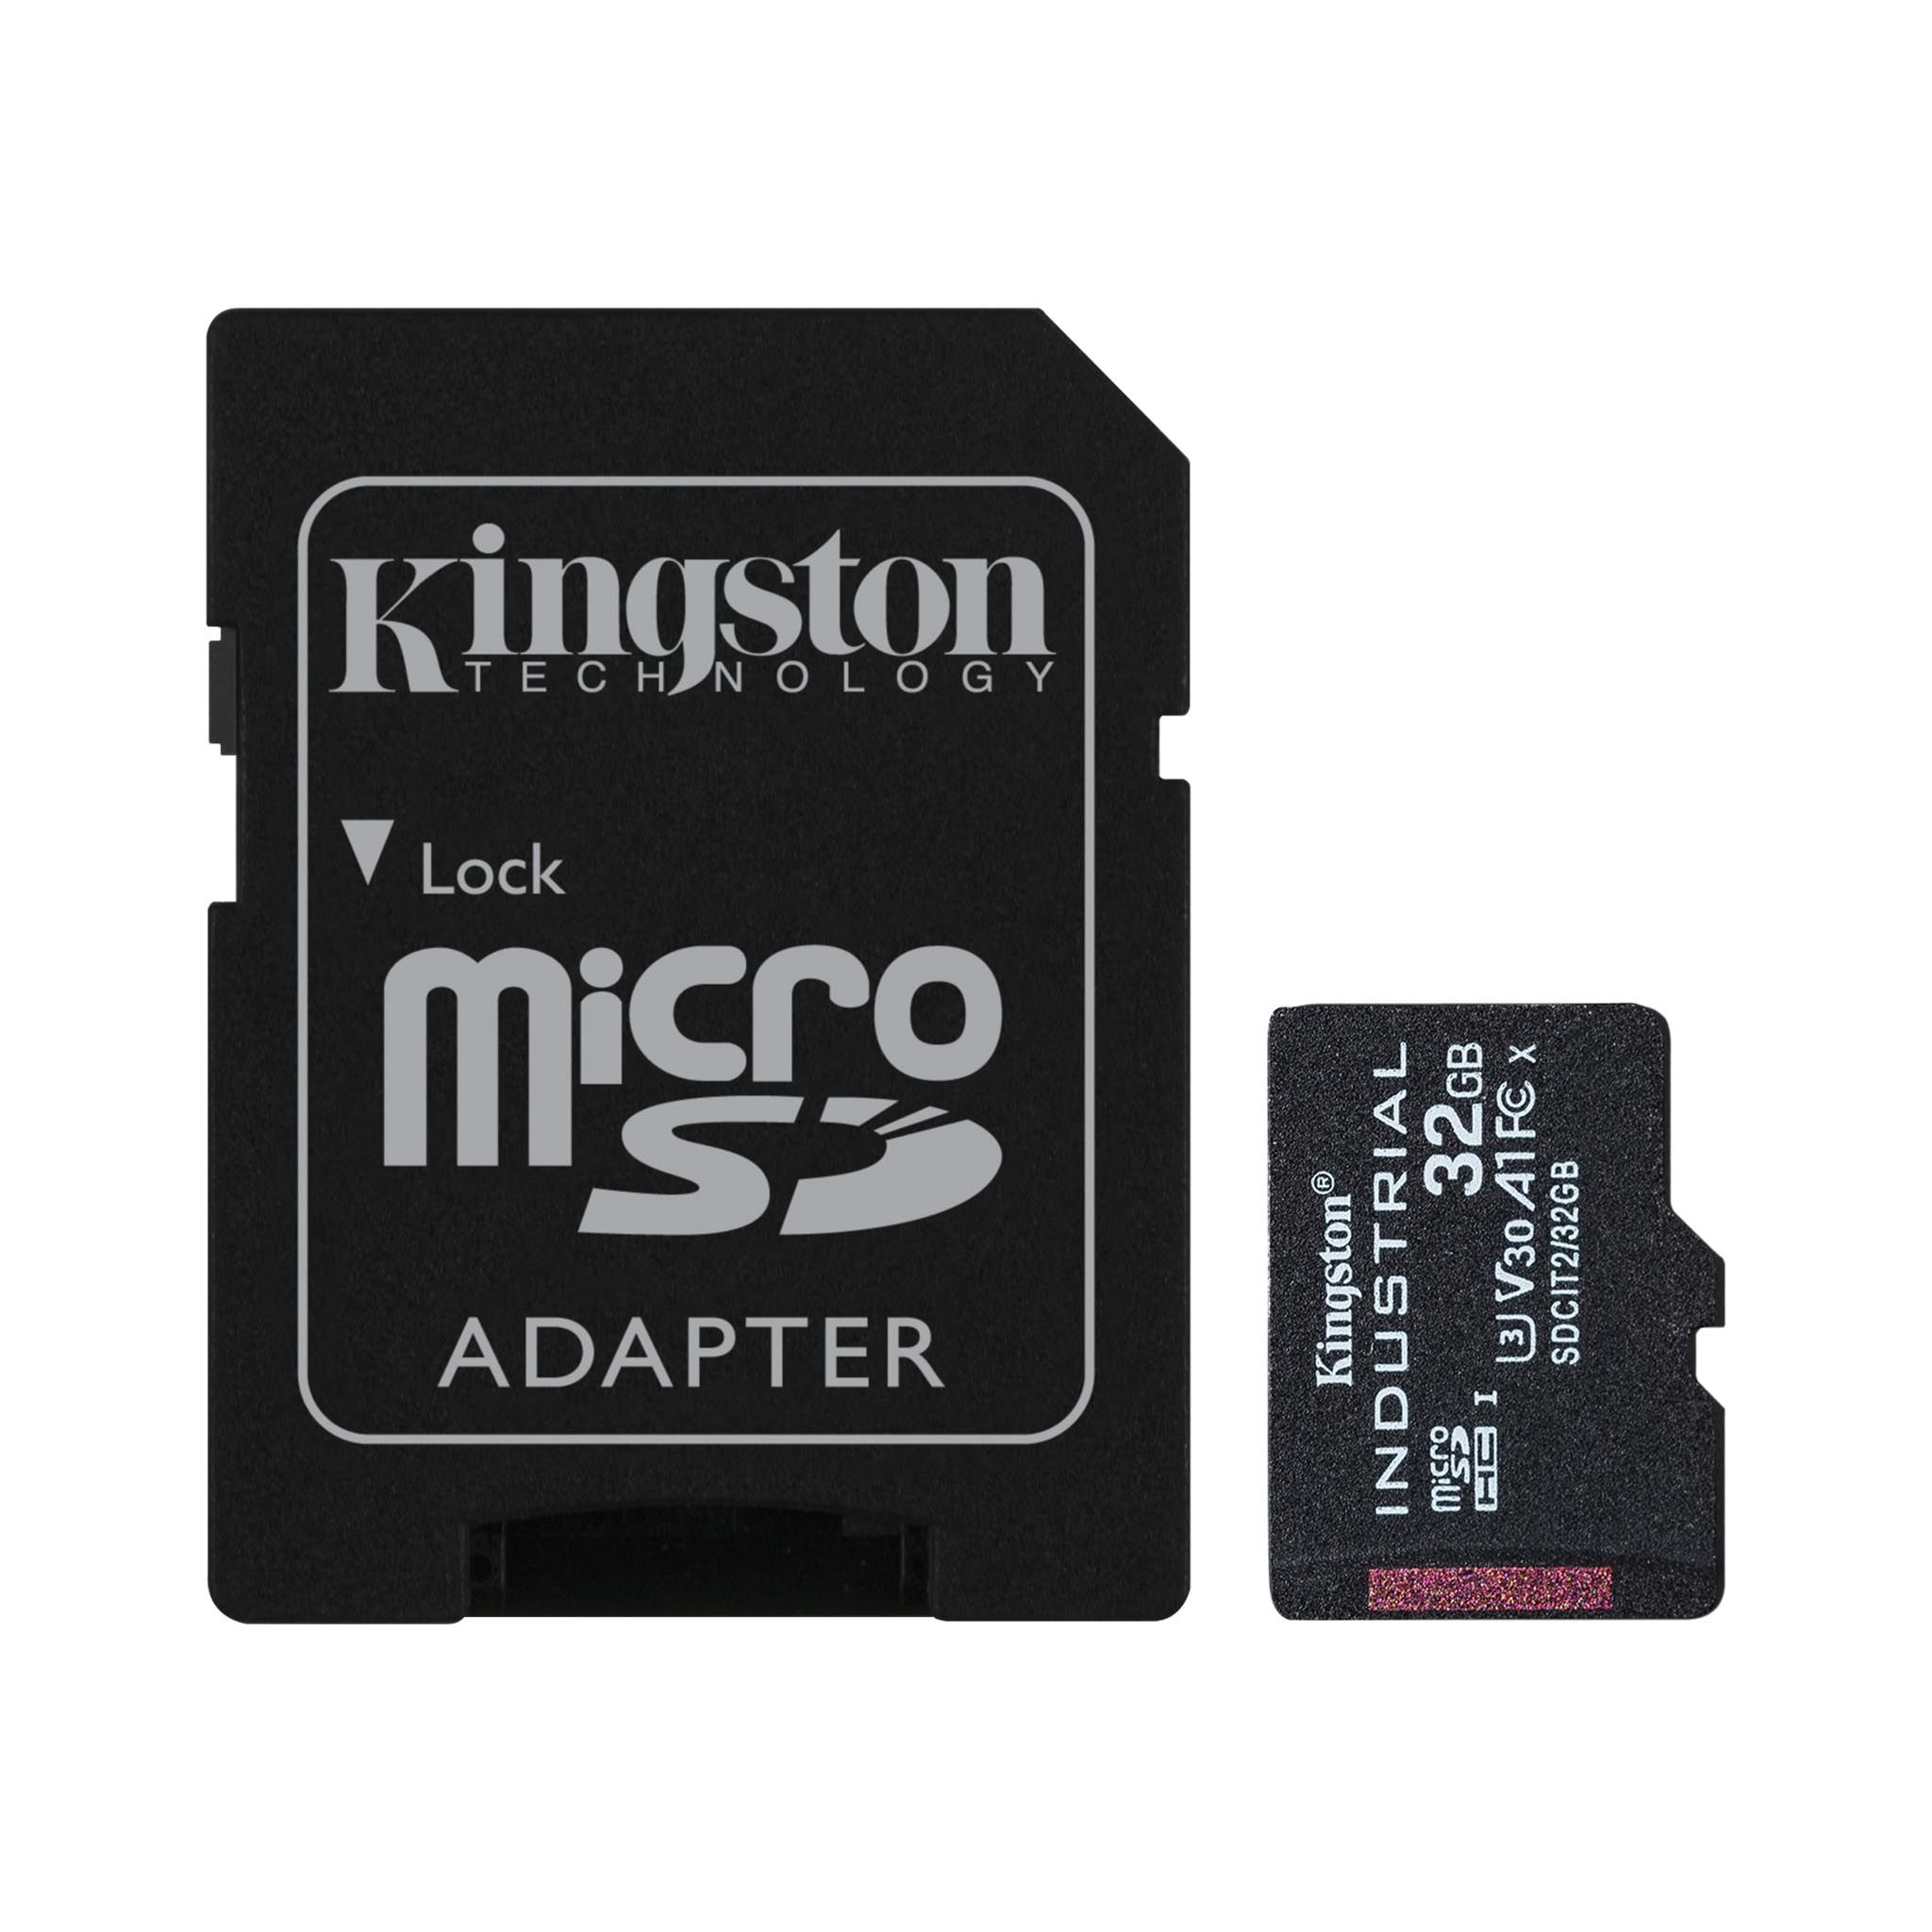 Arena Snooze sad Industrial-Grade microSD Card - Kingston Technology